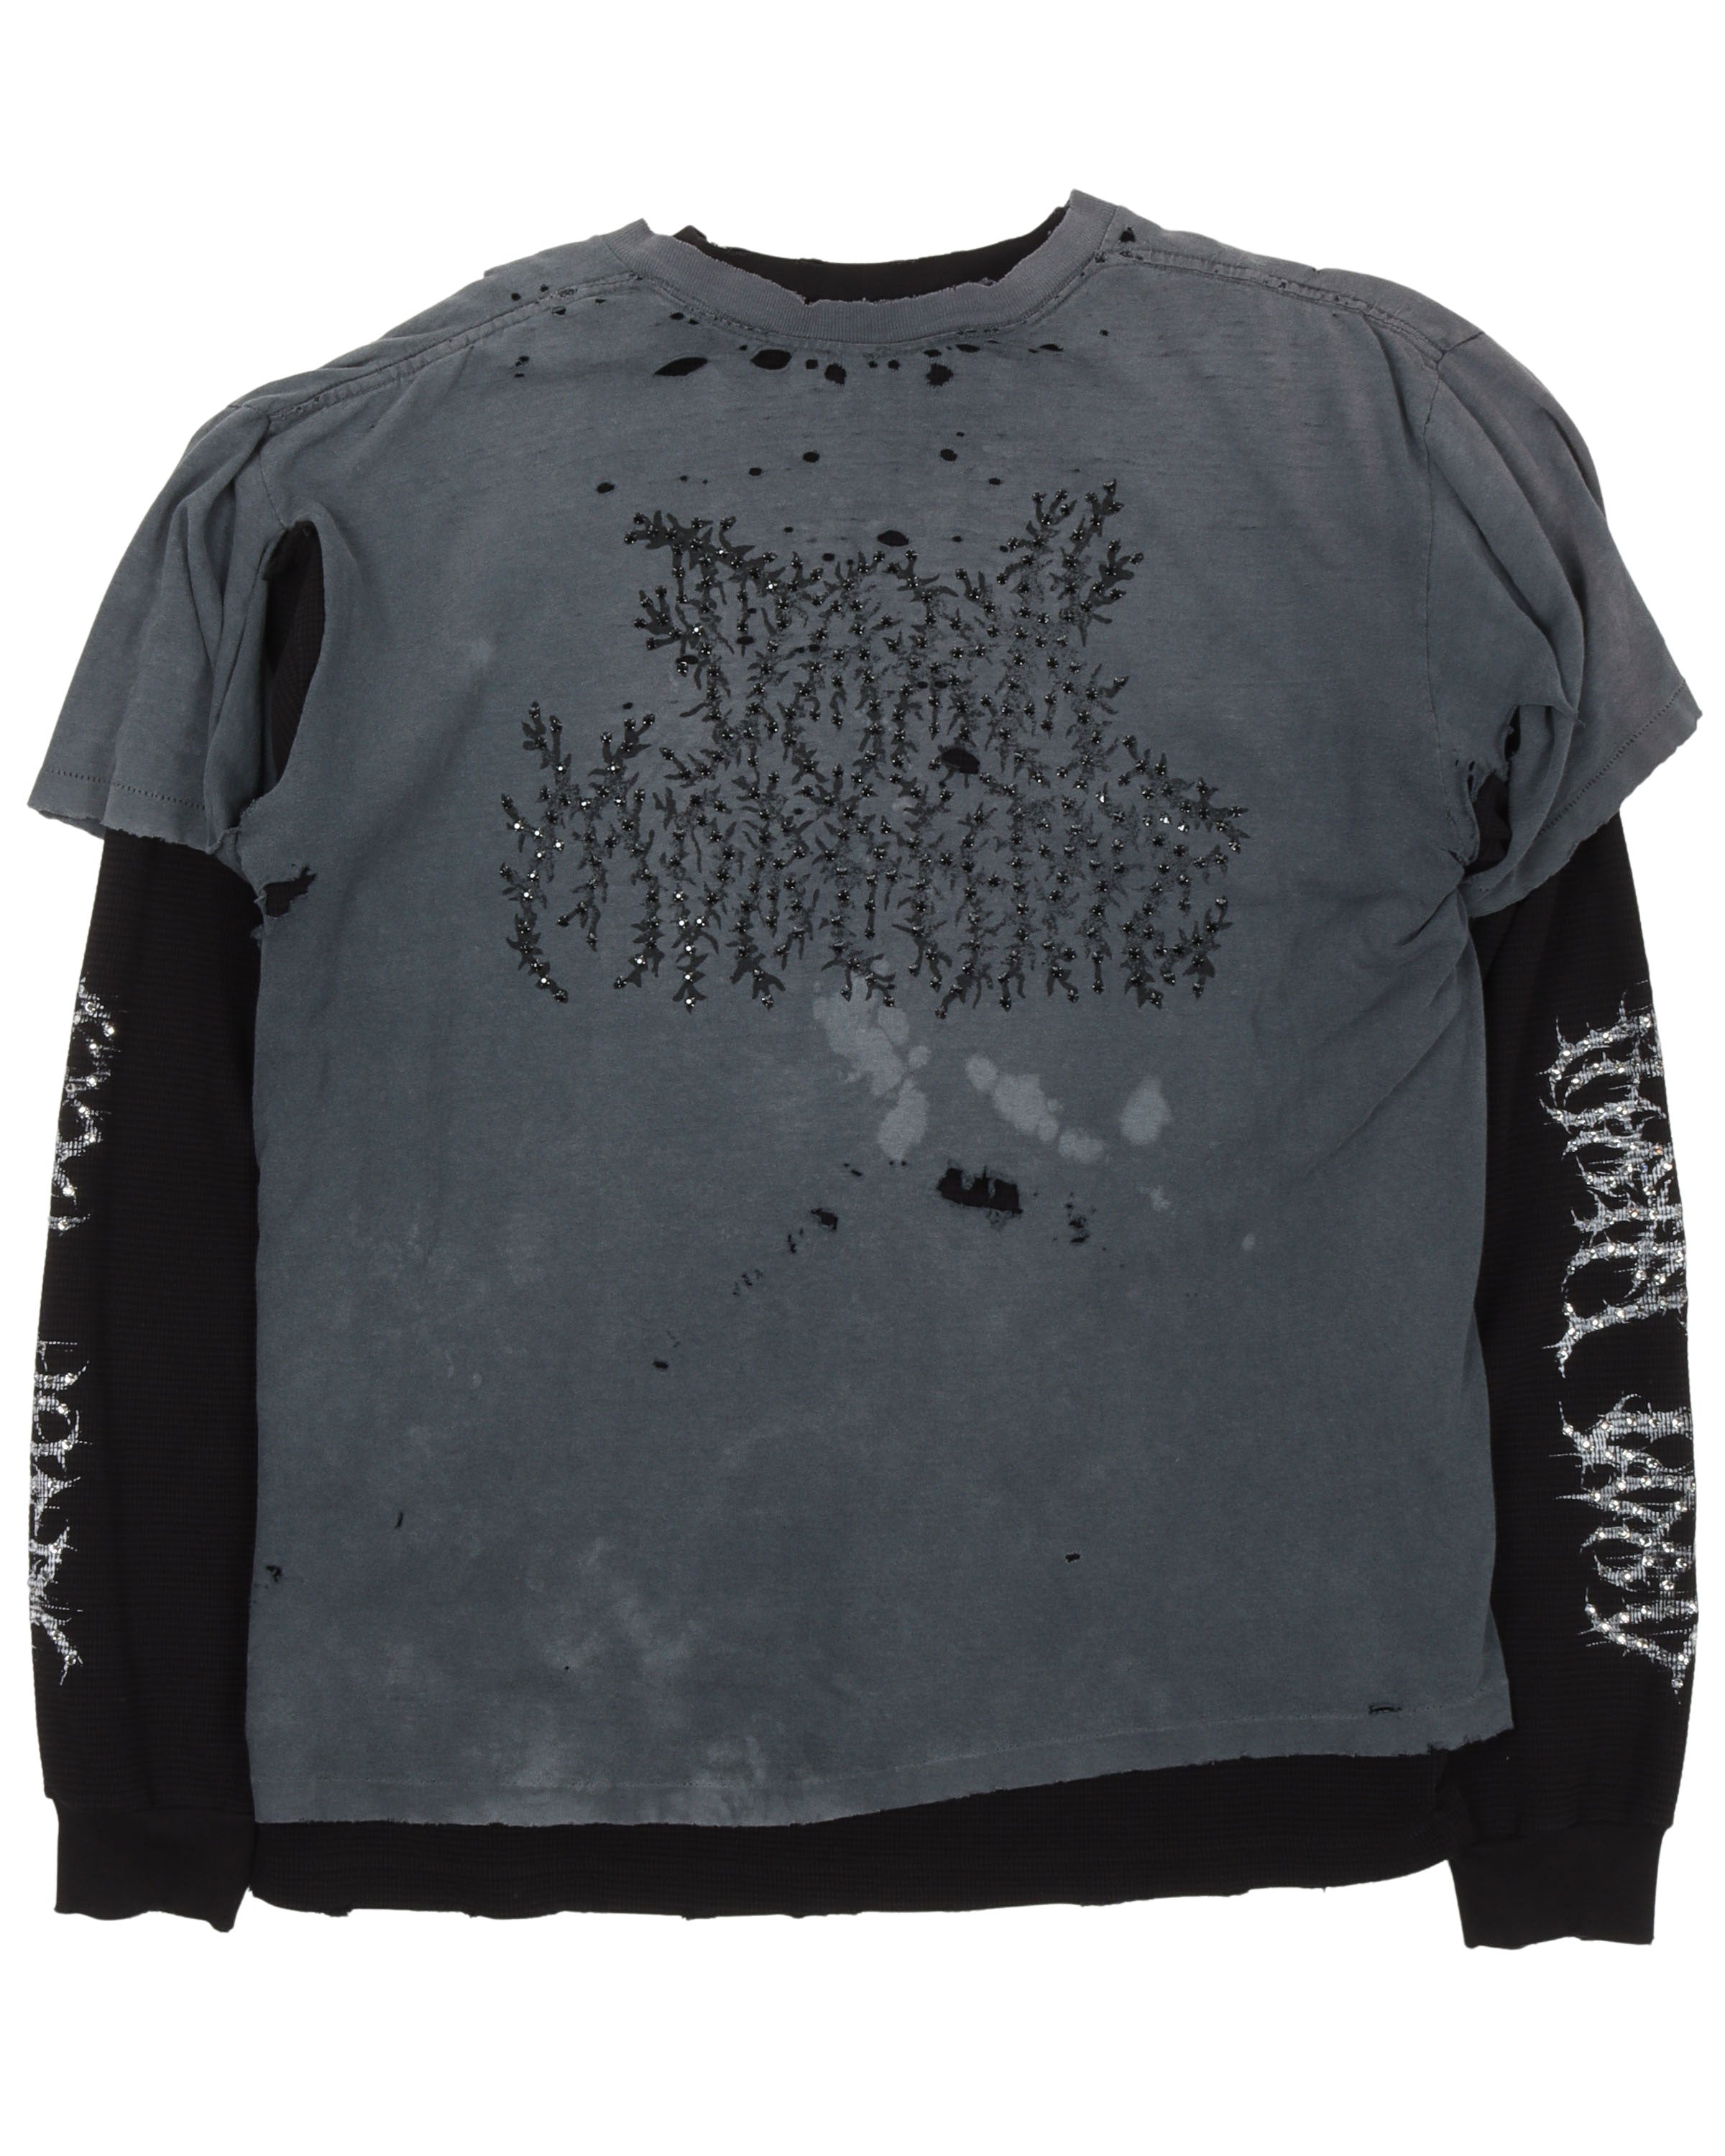 Justin Reed x Thrift Lord Metallica T-Shirt